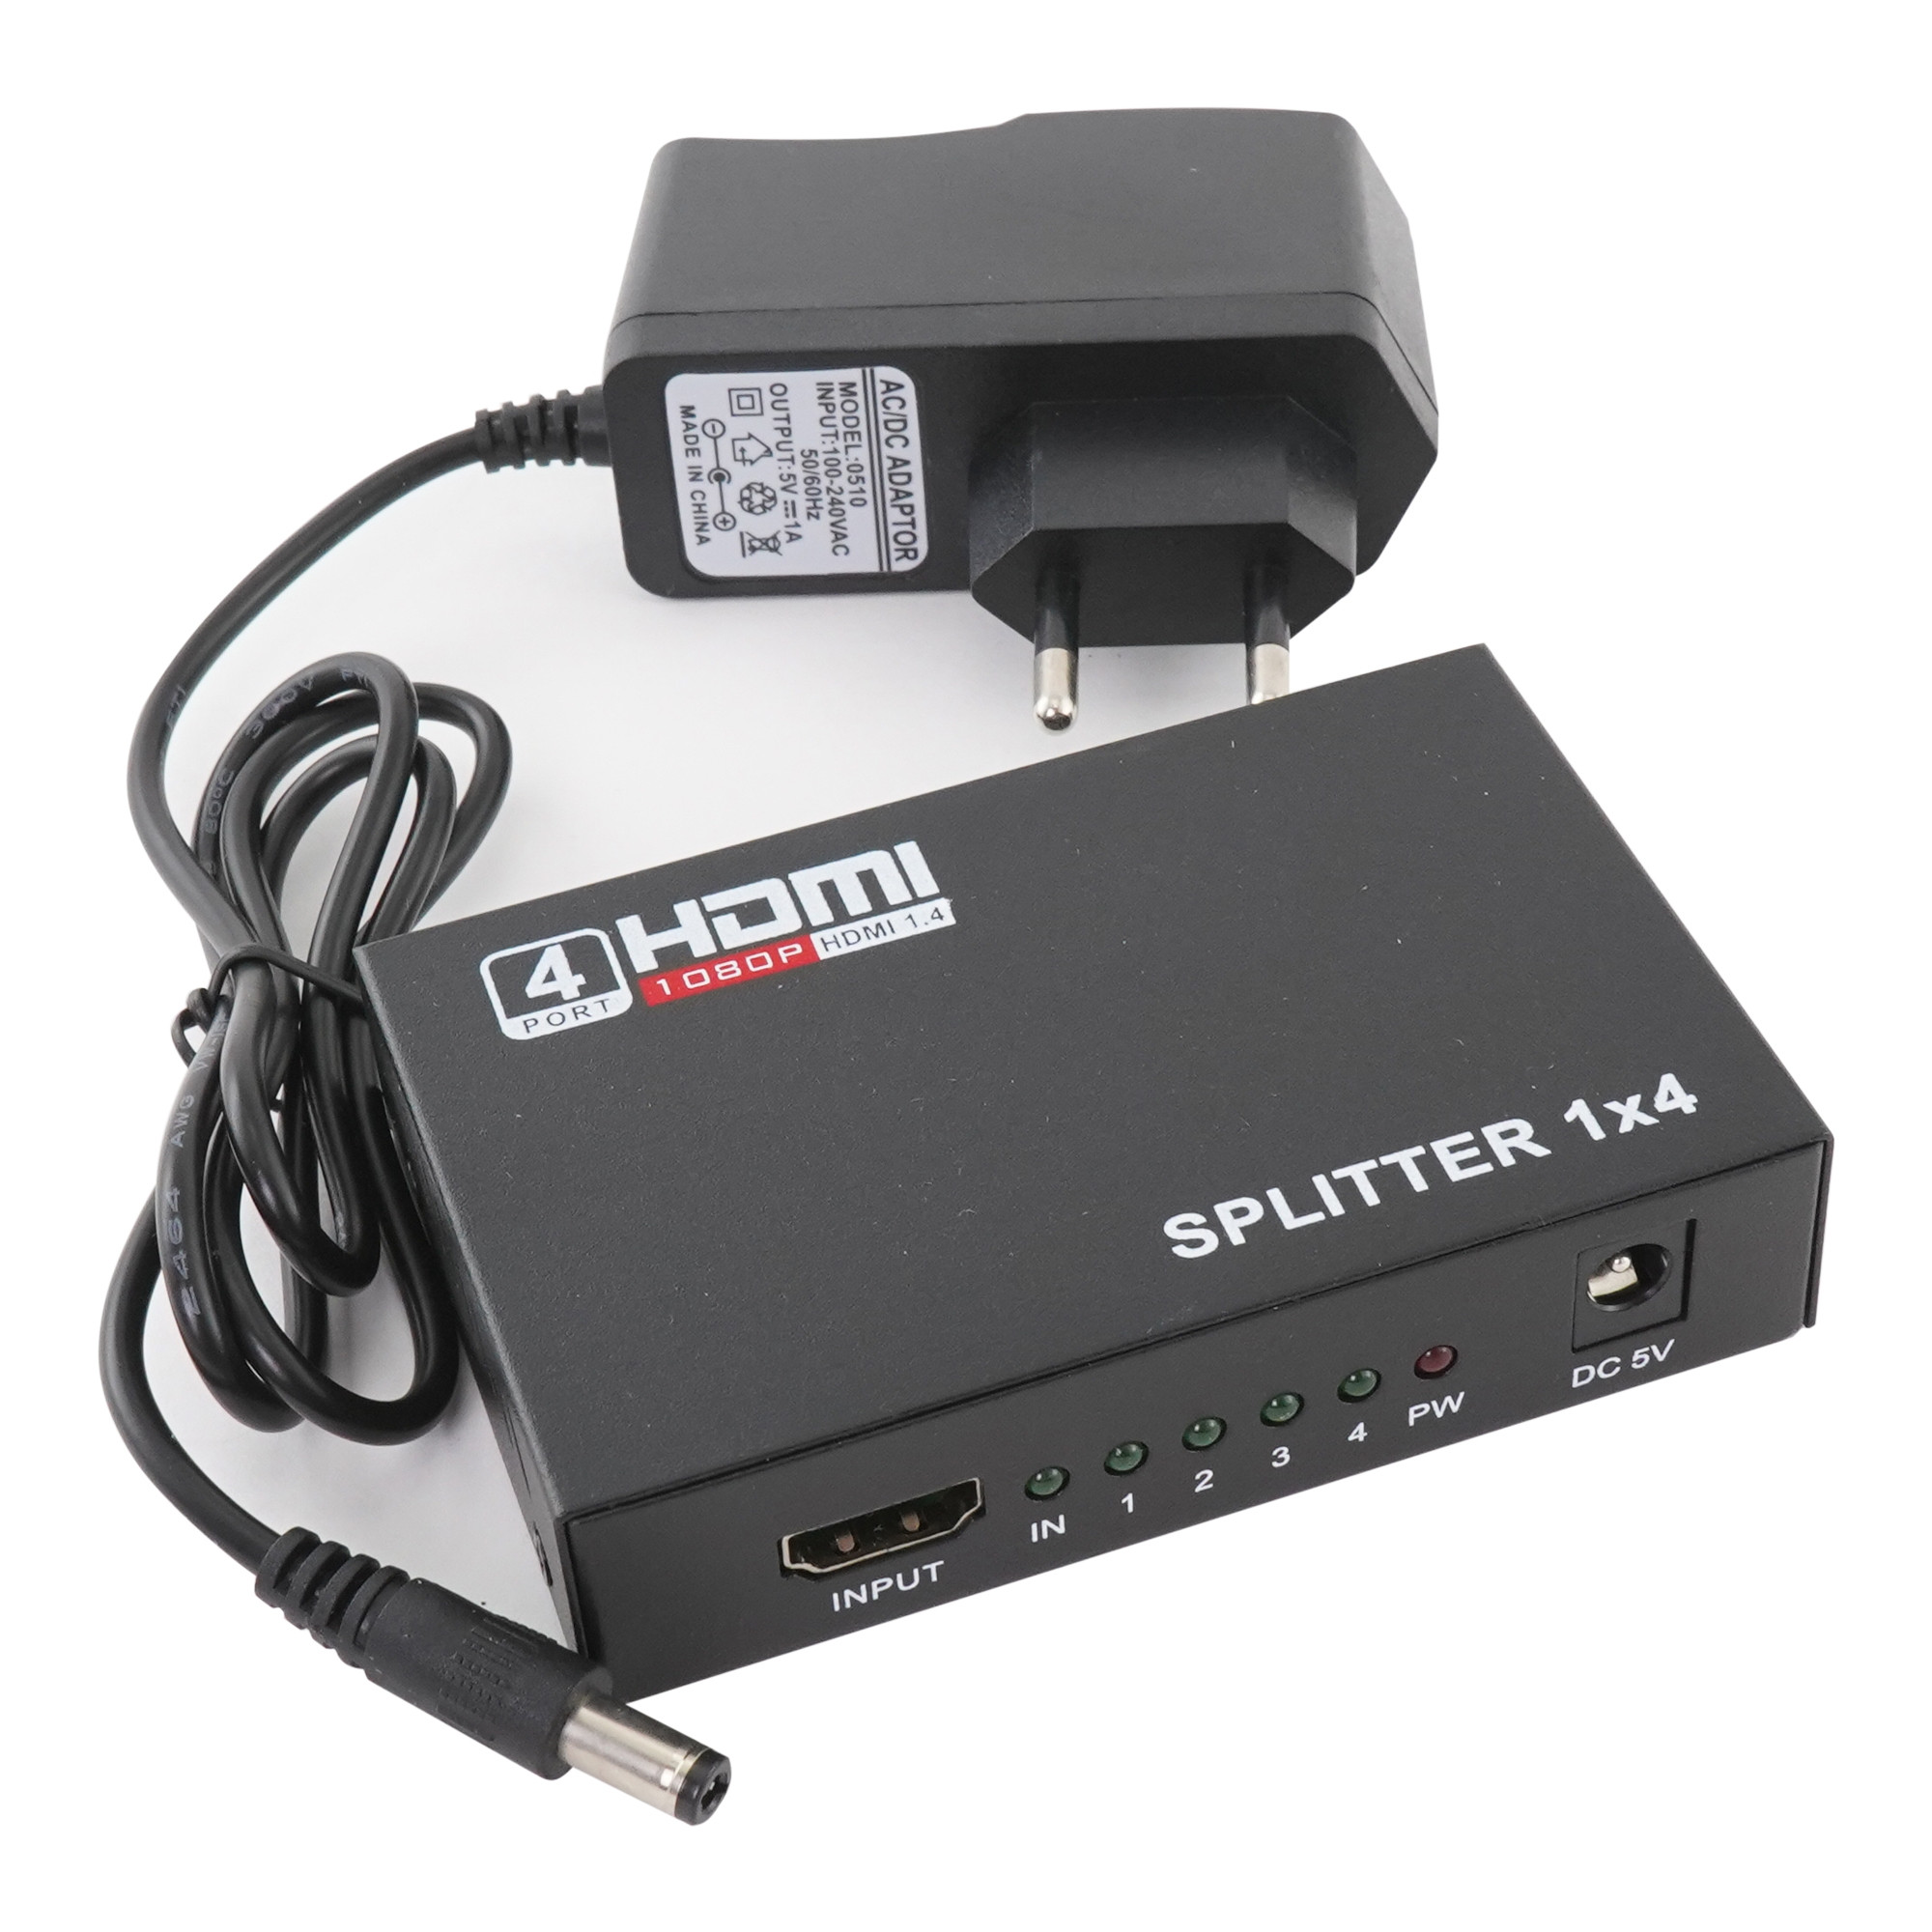 Купить  Сплиттер 1x4 порта HDMI splitter ver 1,4 1080P, 3D